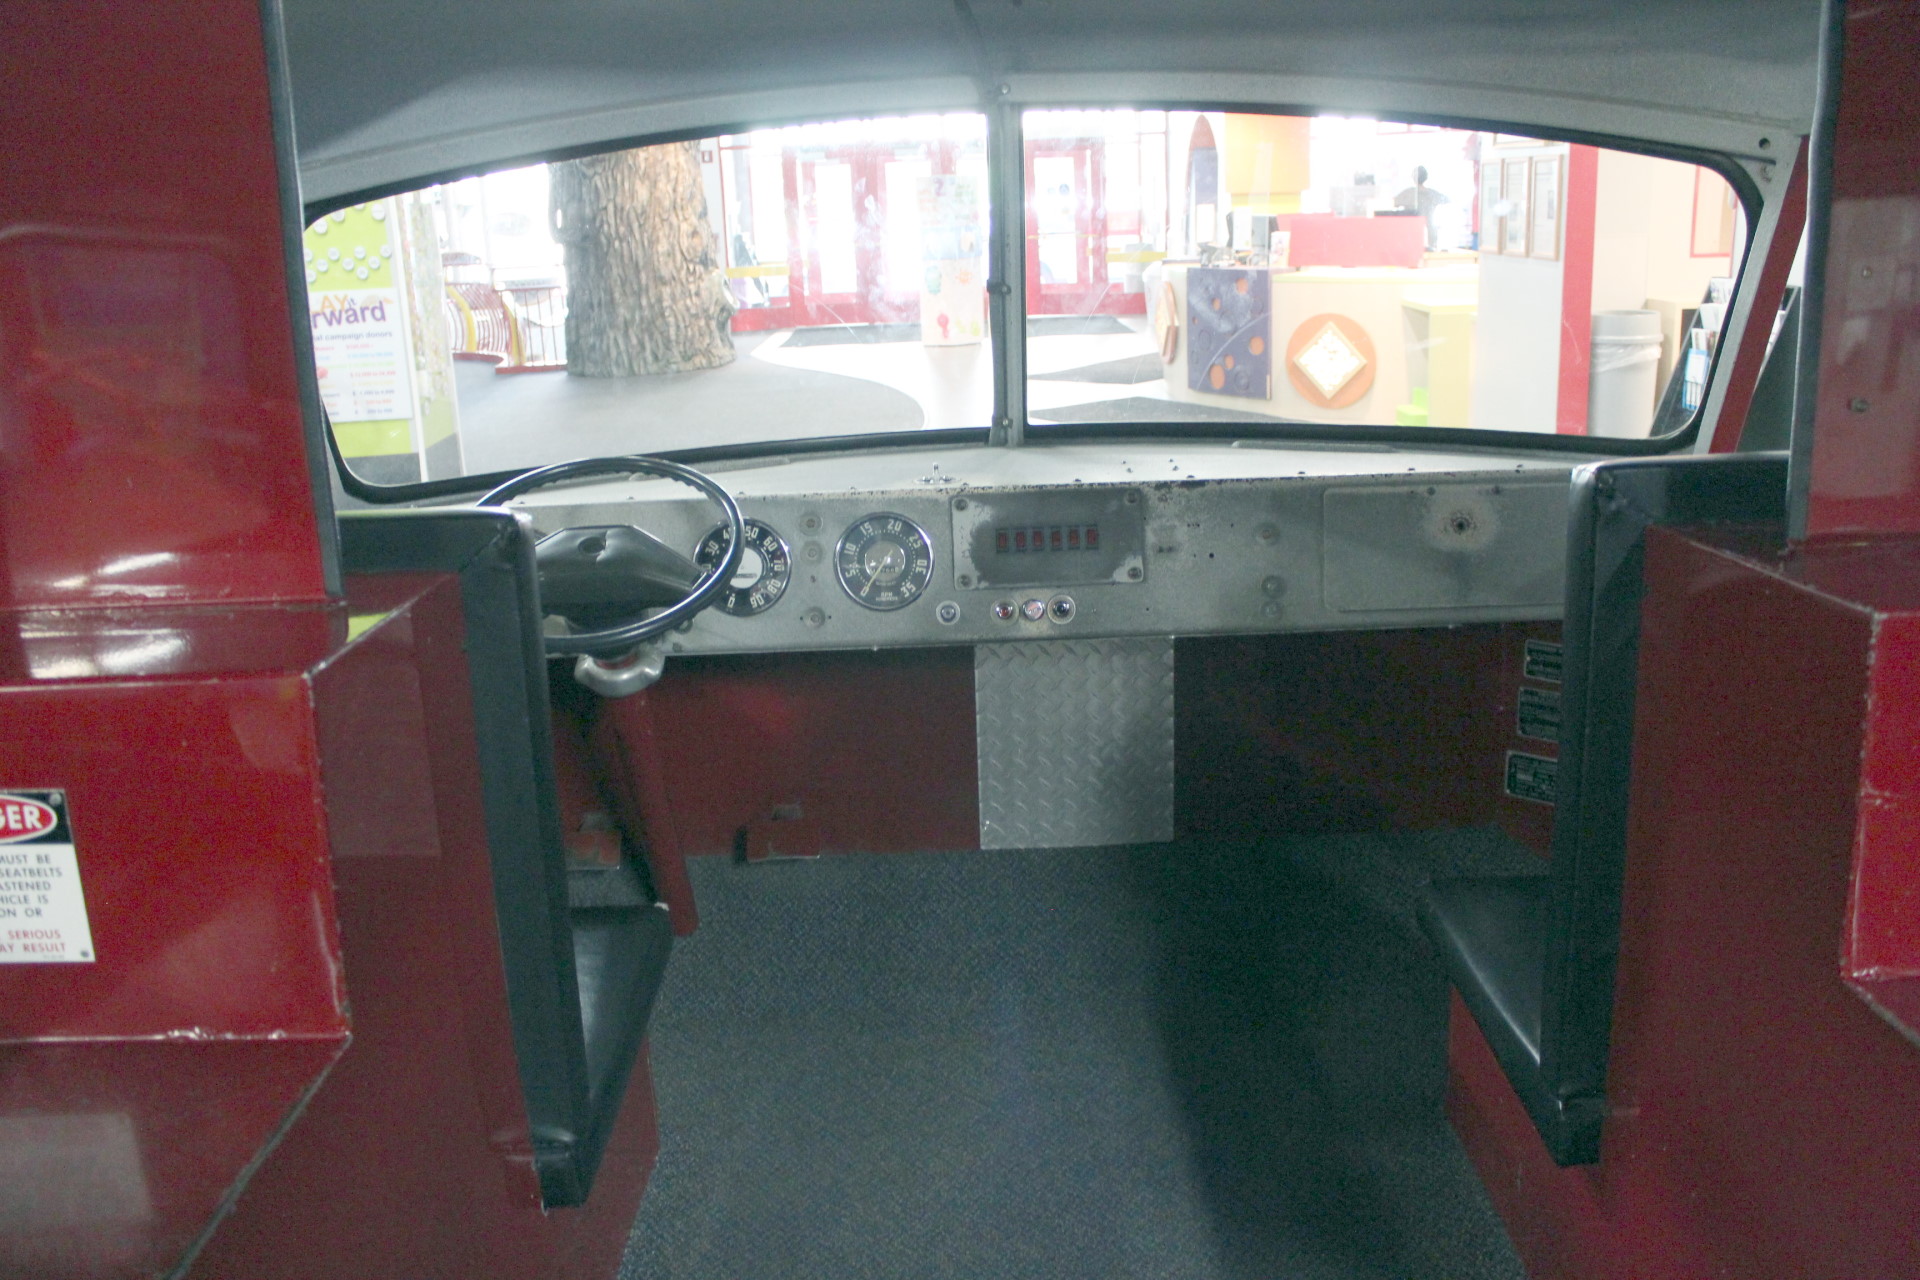 Fire Truck & Fire Station Exhibit